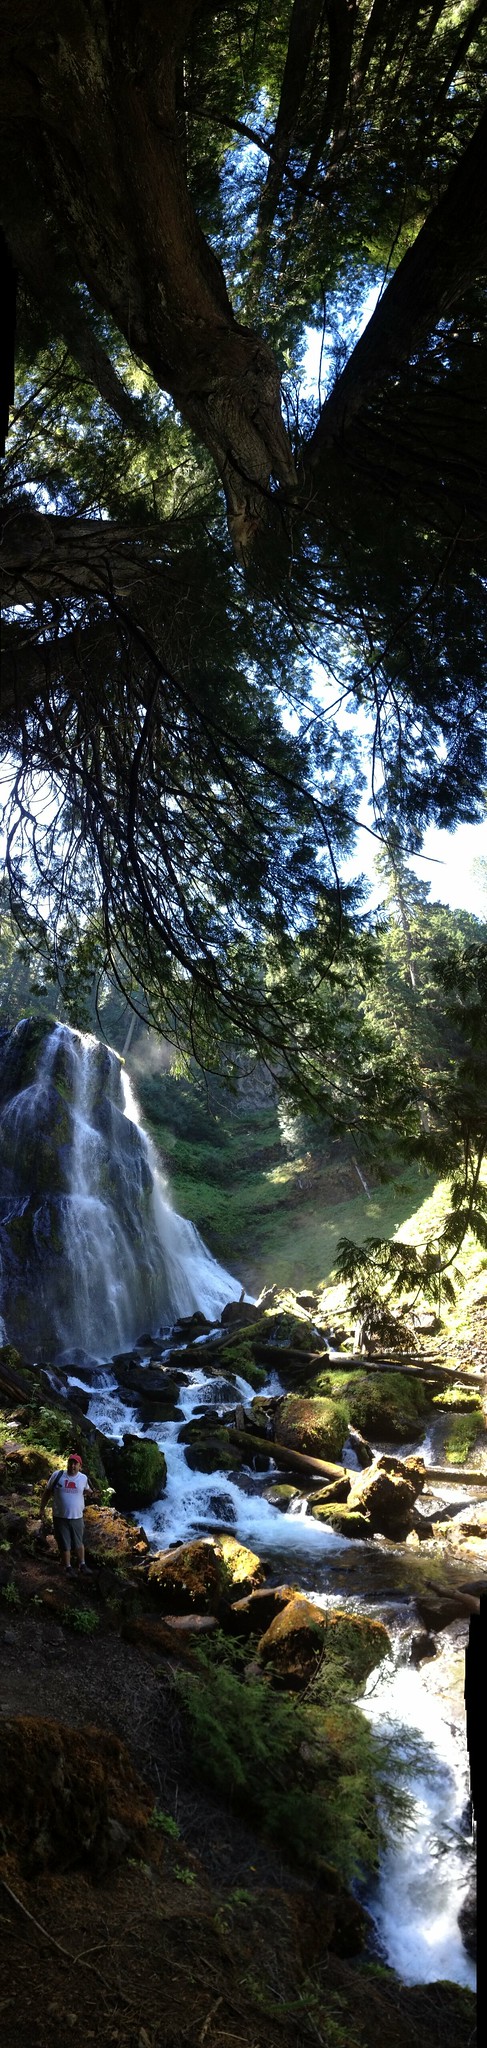 Falls Creek Falls Vertorama